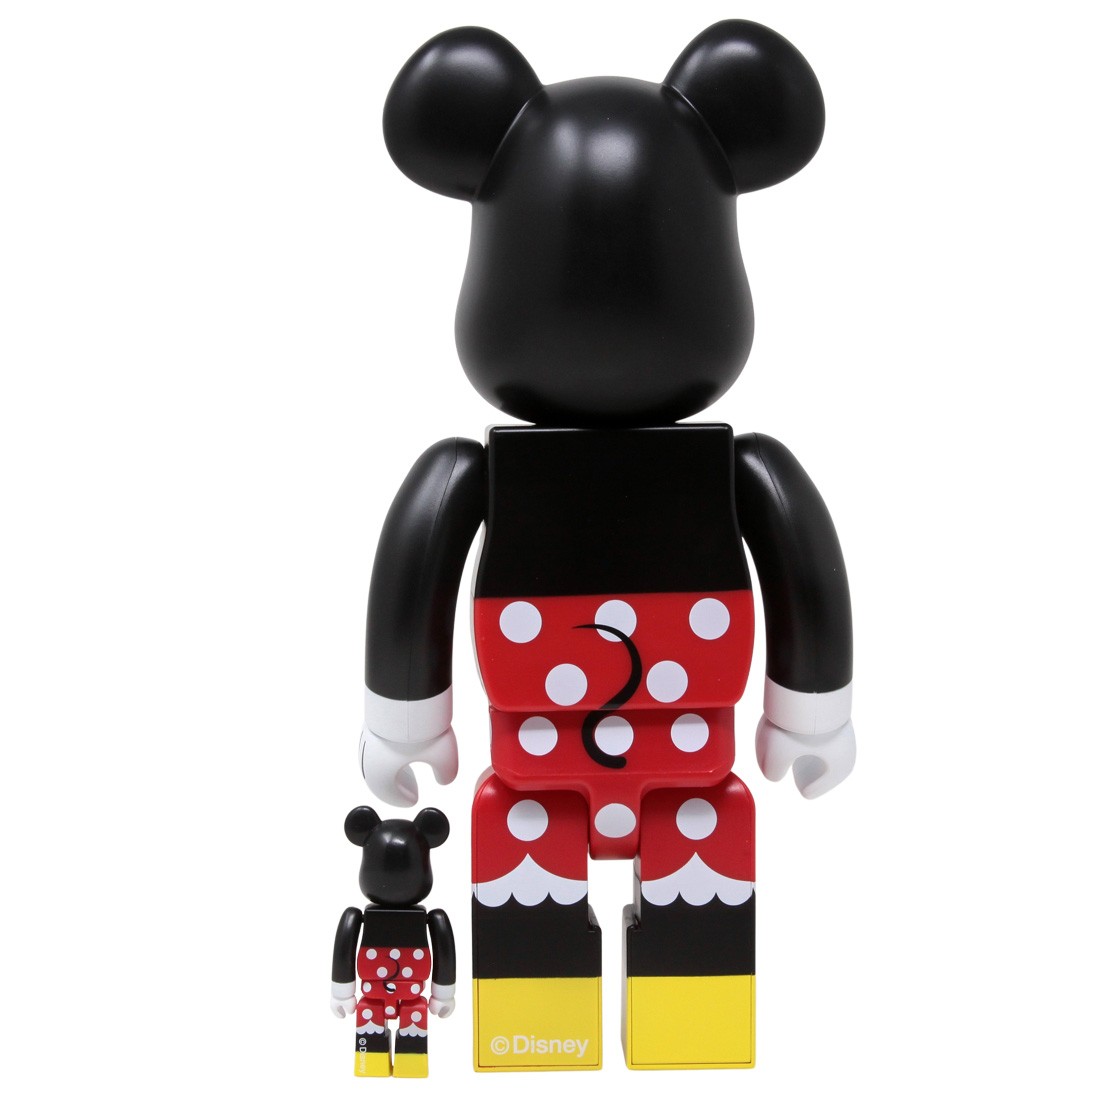 Medicom Disney Minnie Mouse 100% 400% Bearbrick Figure Set black red